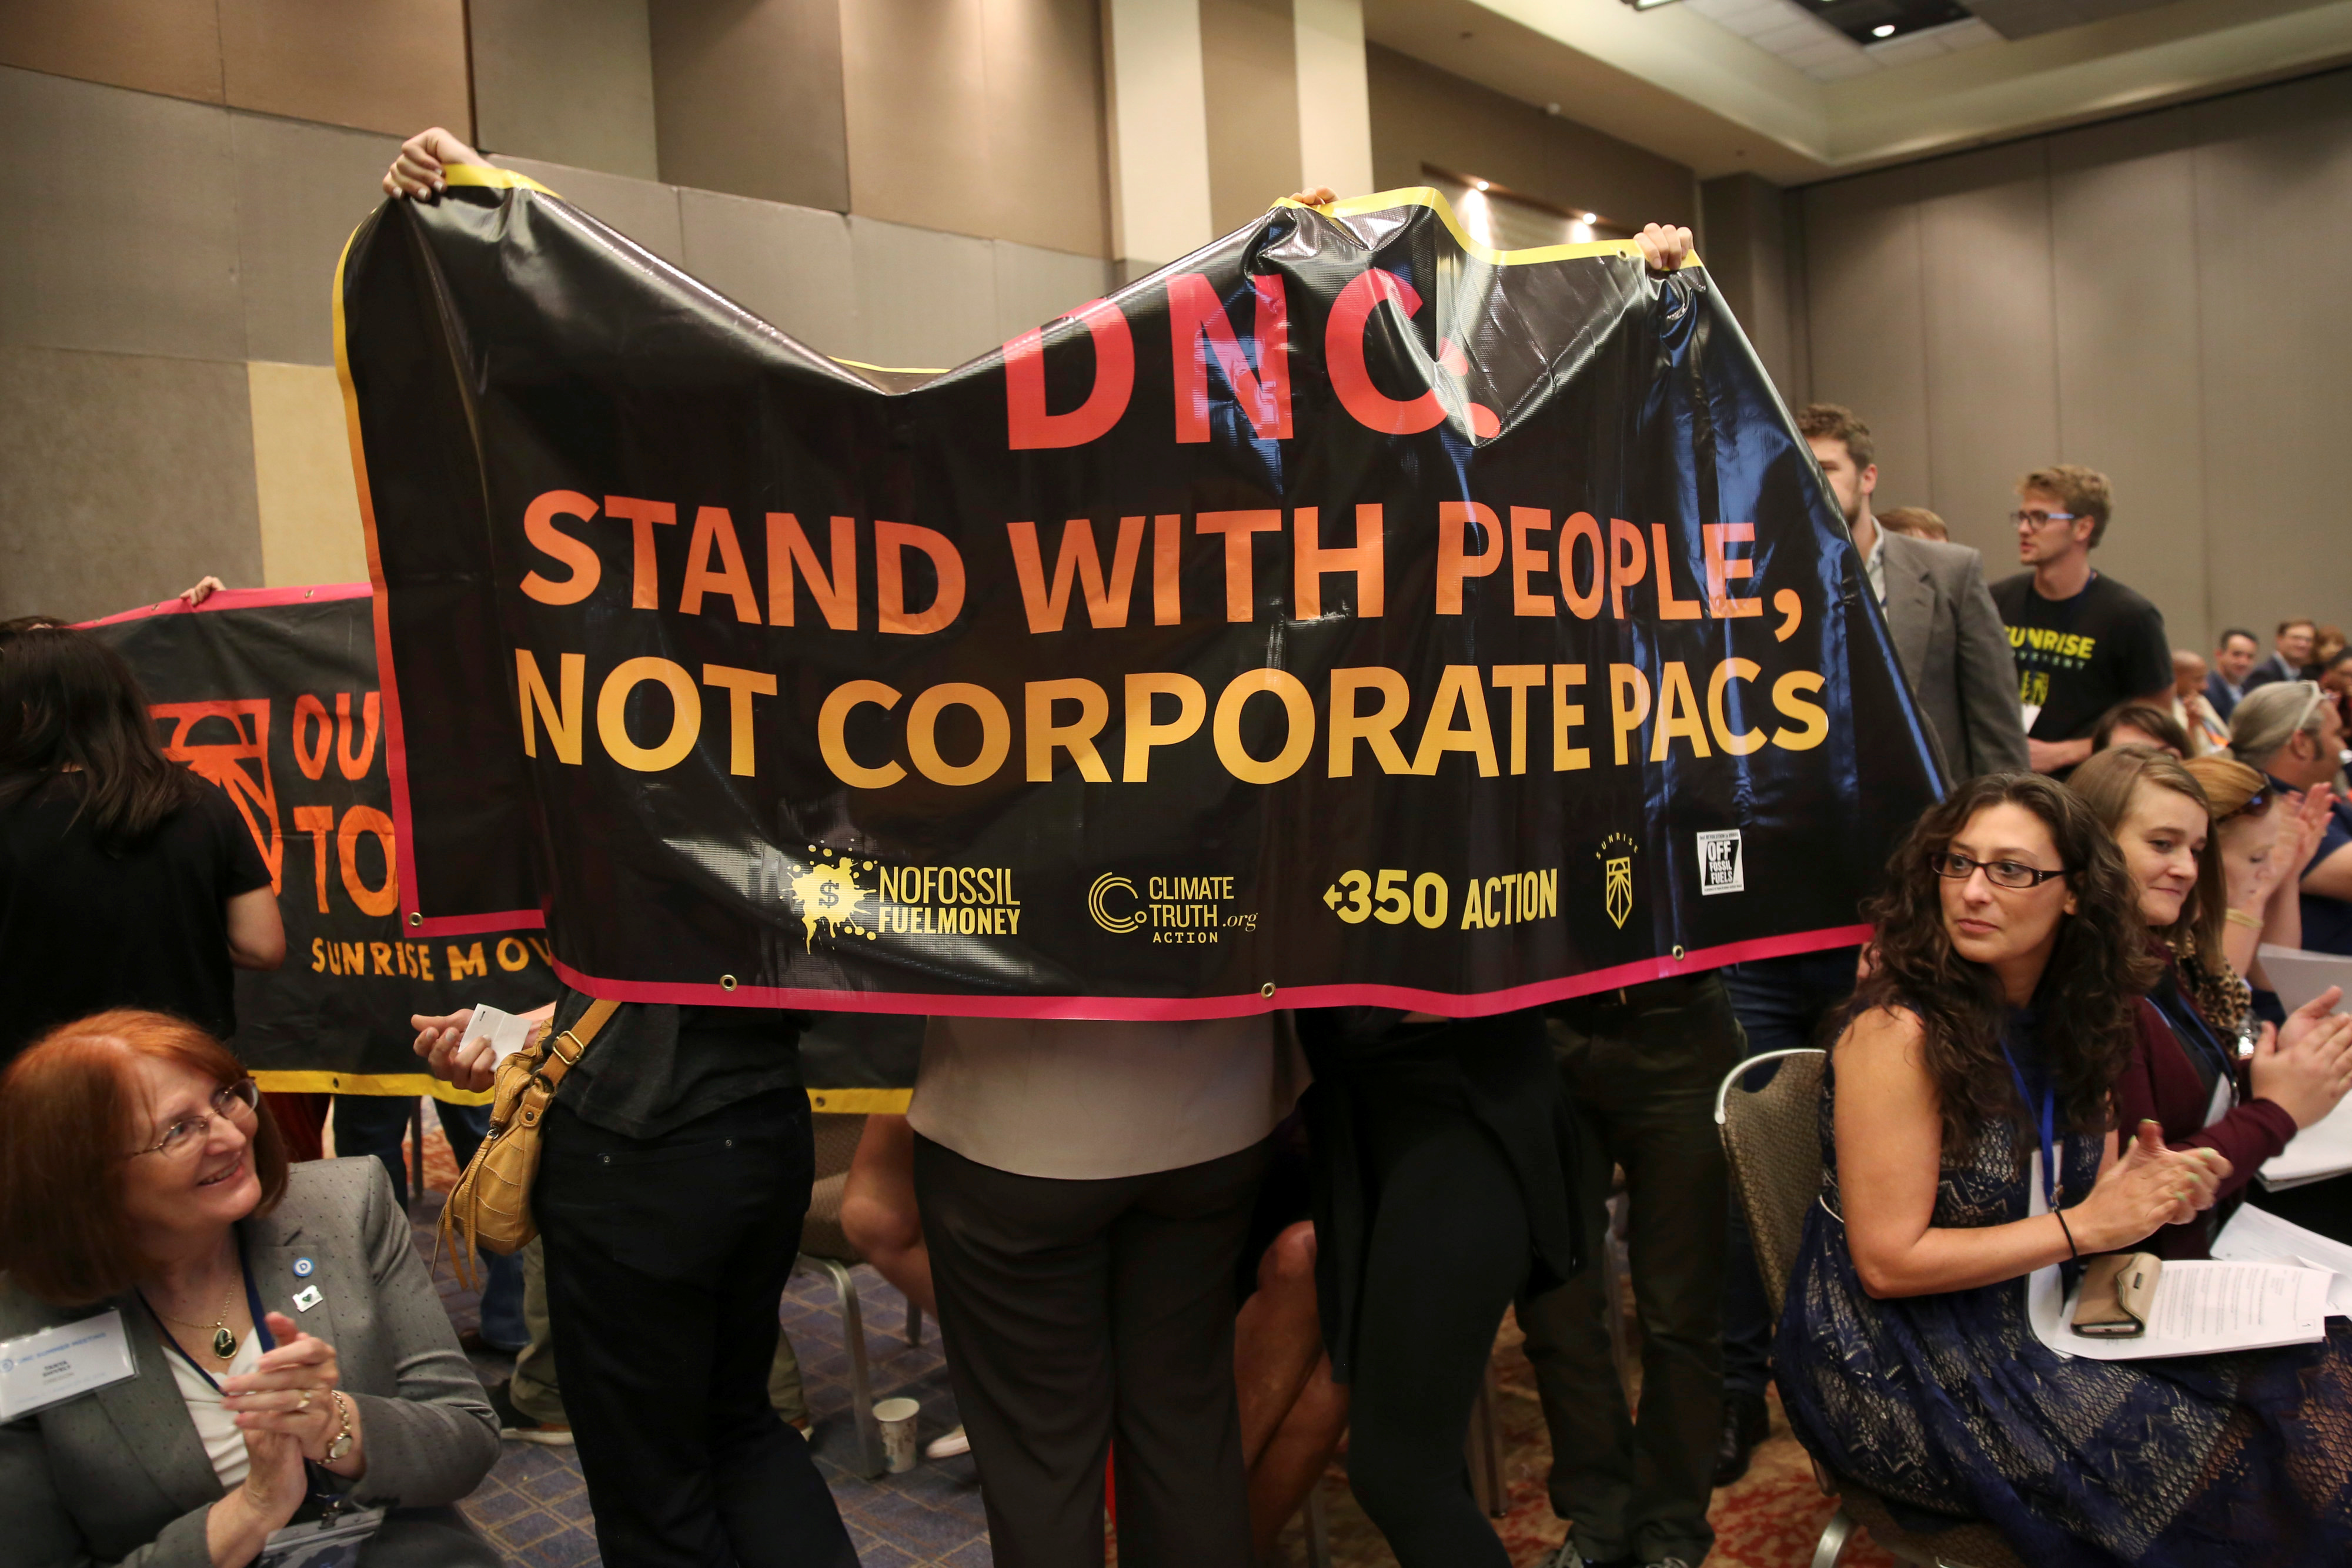 Demonstrators interrupt the DNC Summer Meeting in Chicago